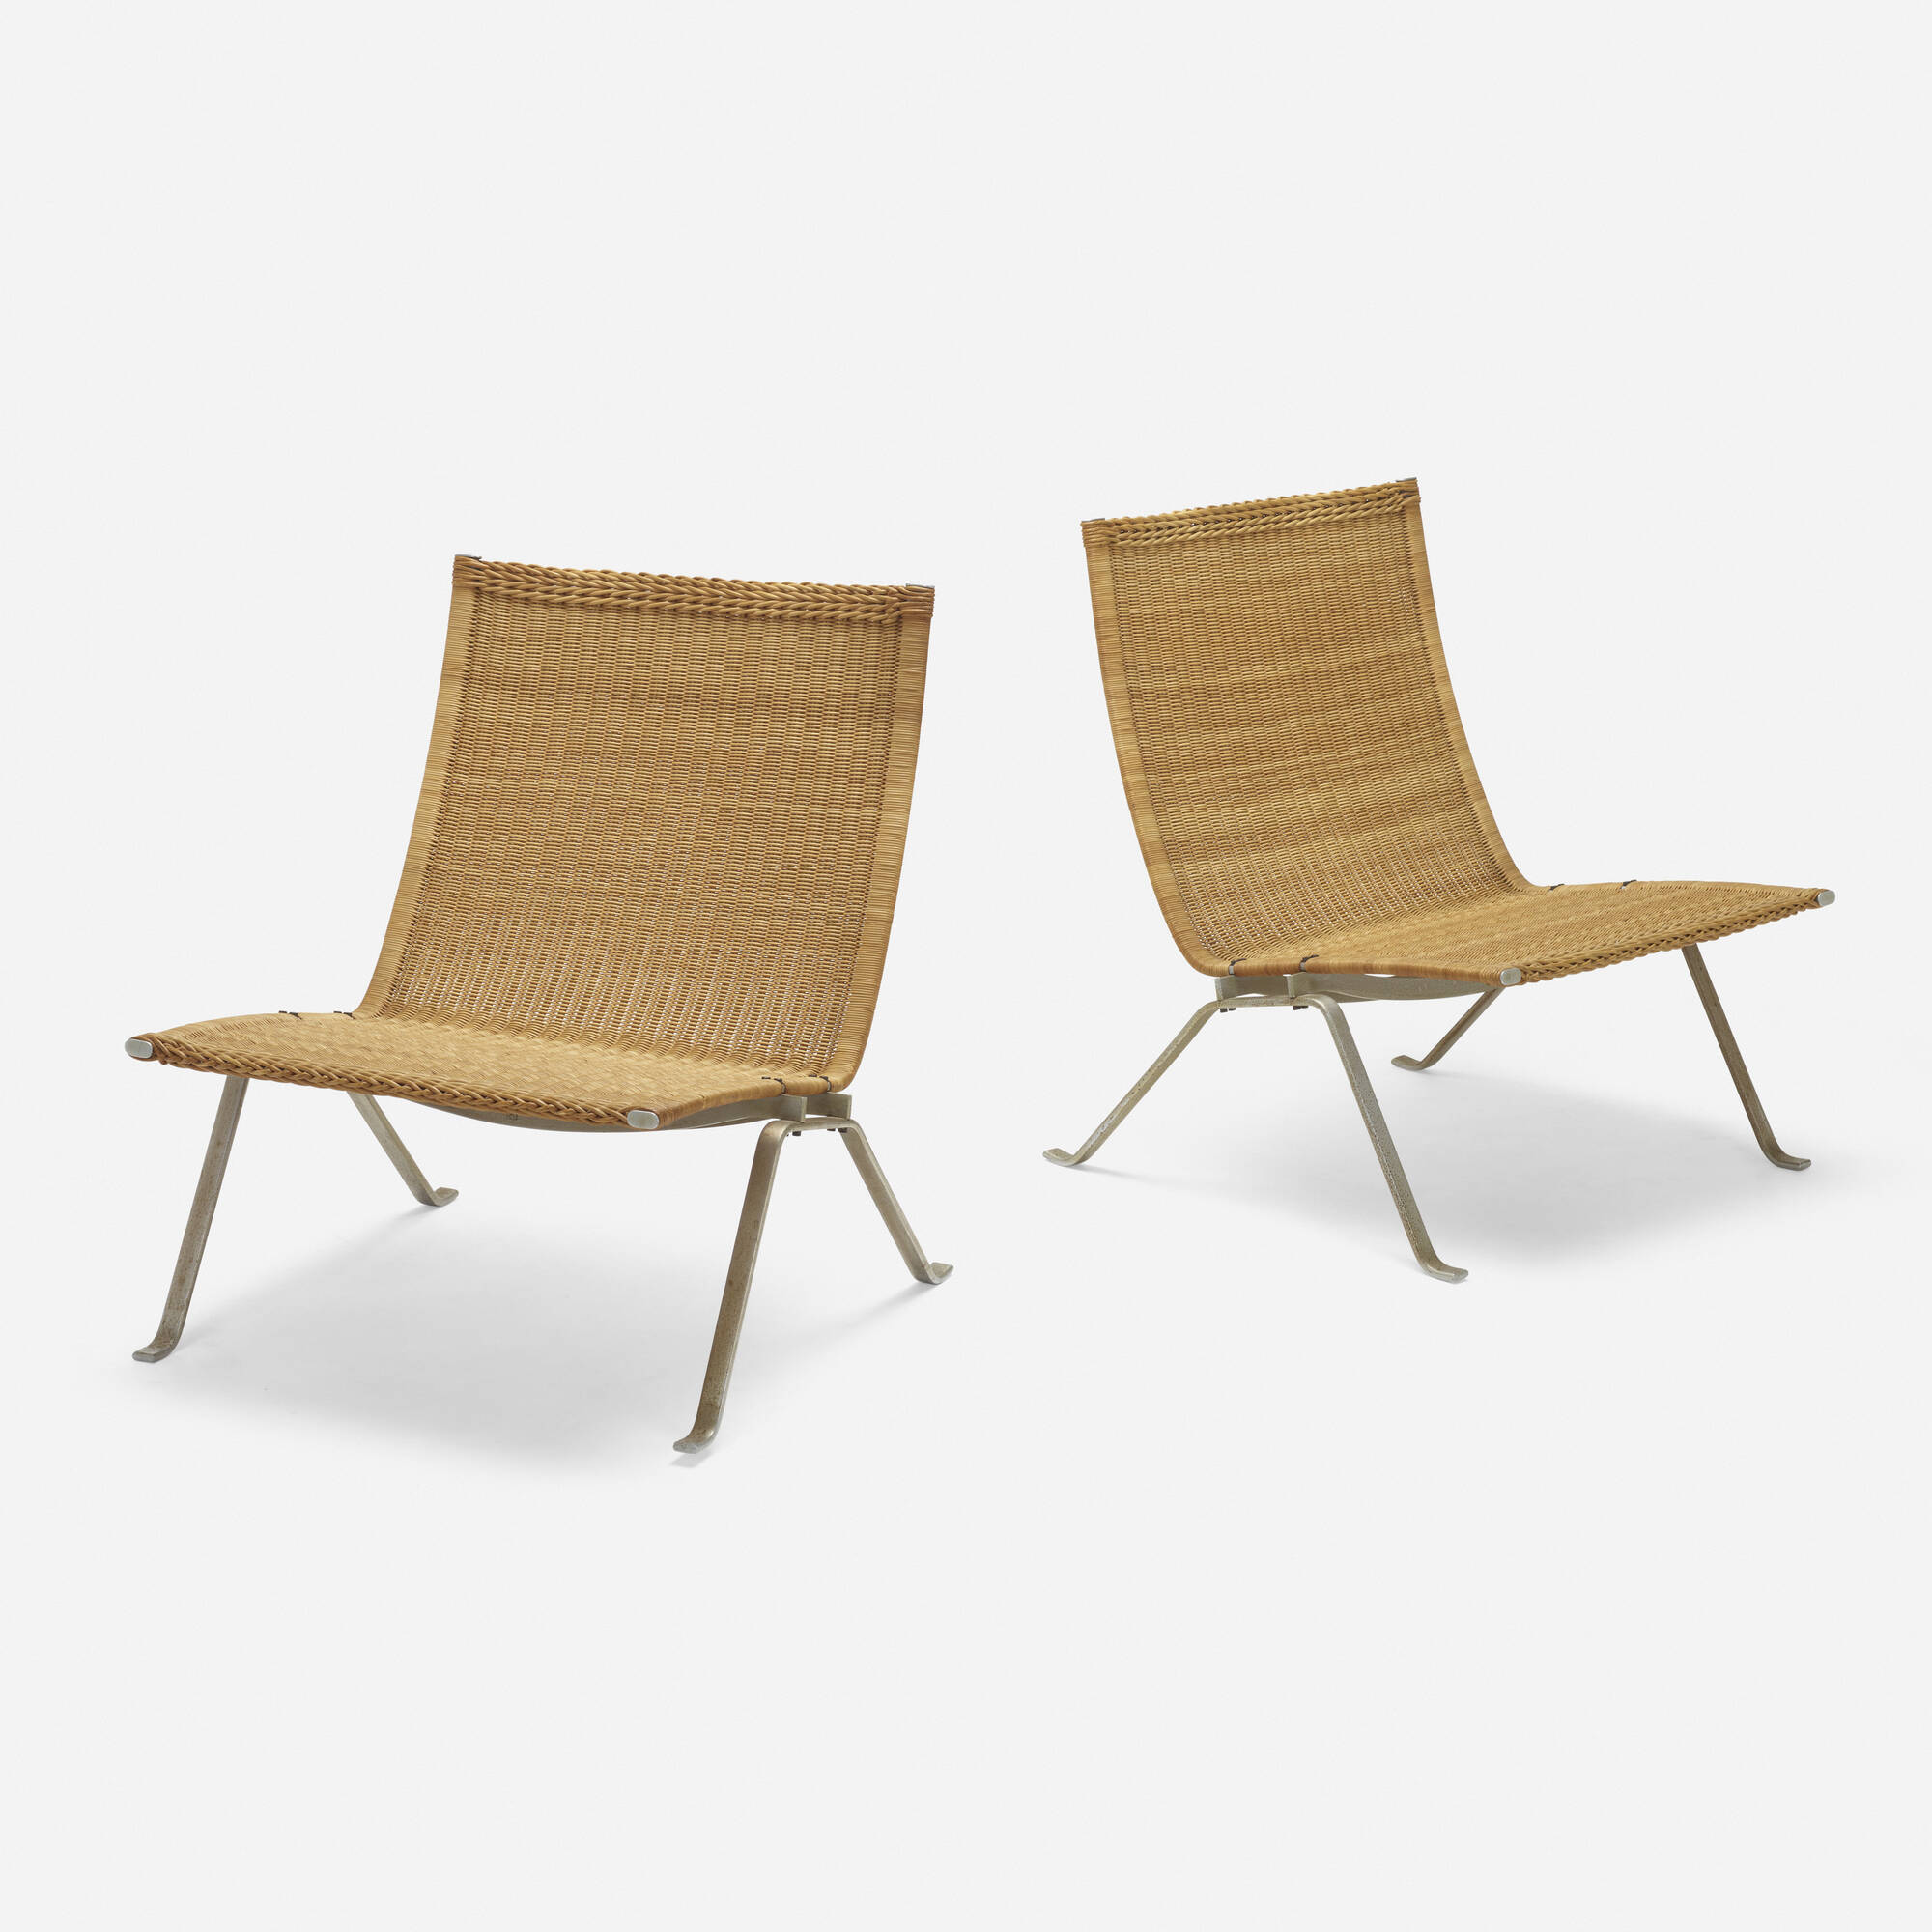 423: POUL KJAERHOLM, PK 22 lounge chairs, pair < Modern Design, 19 